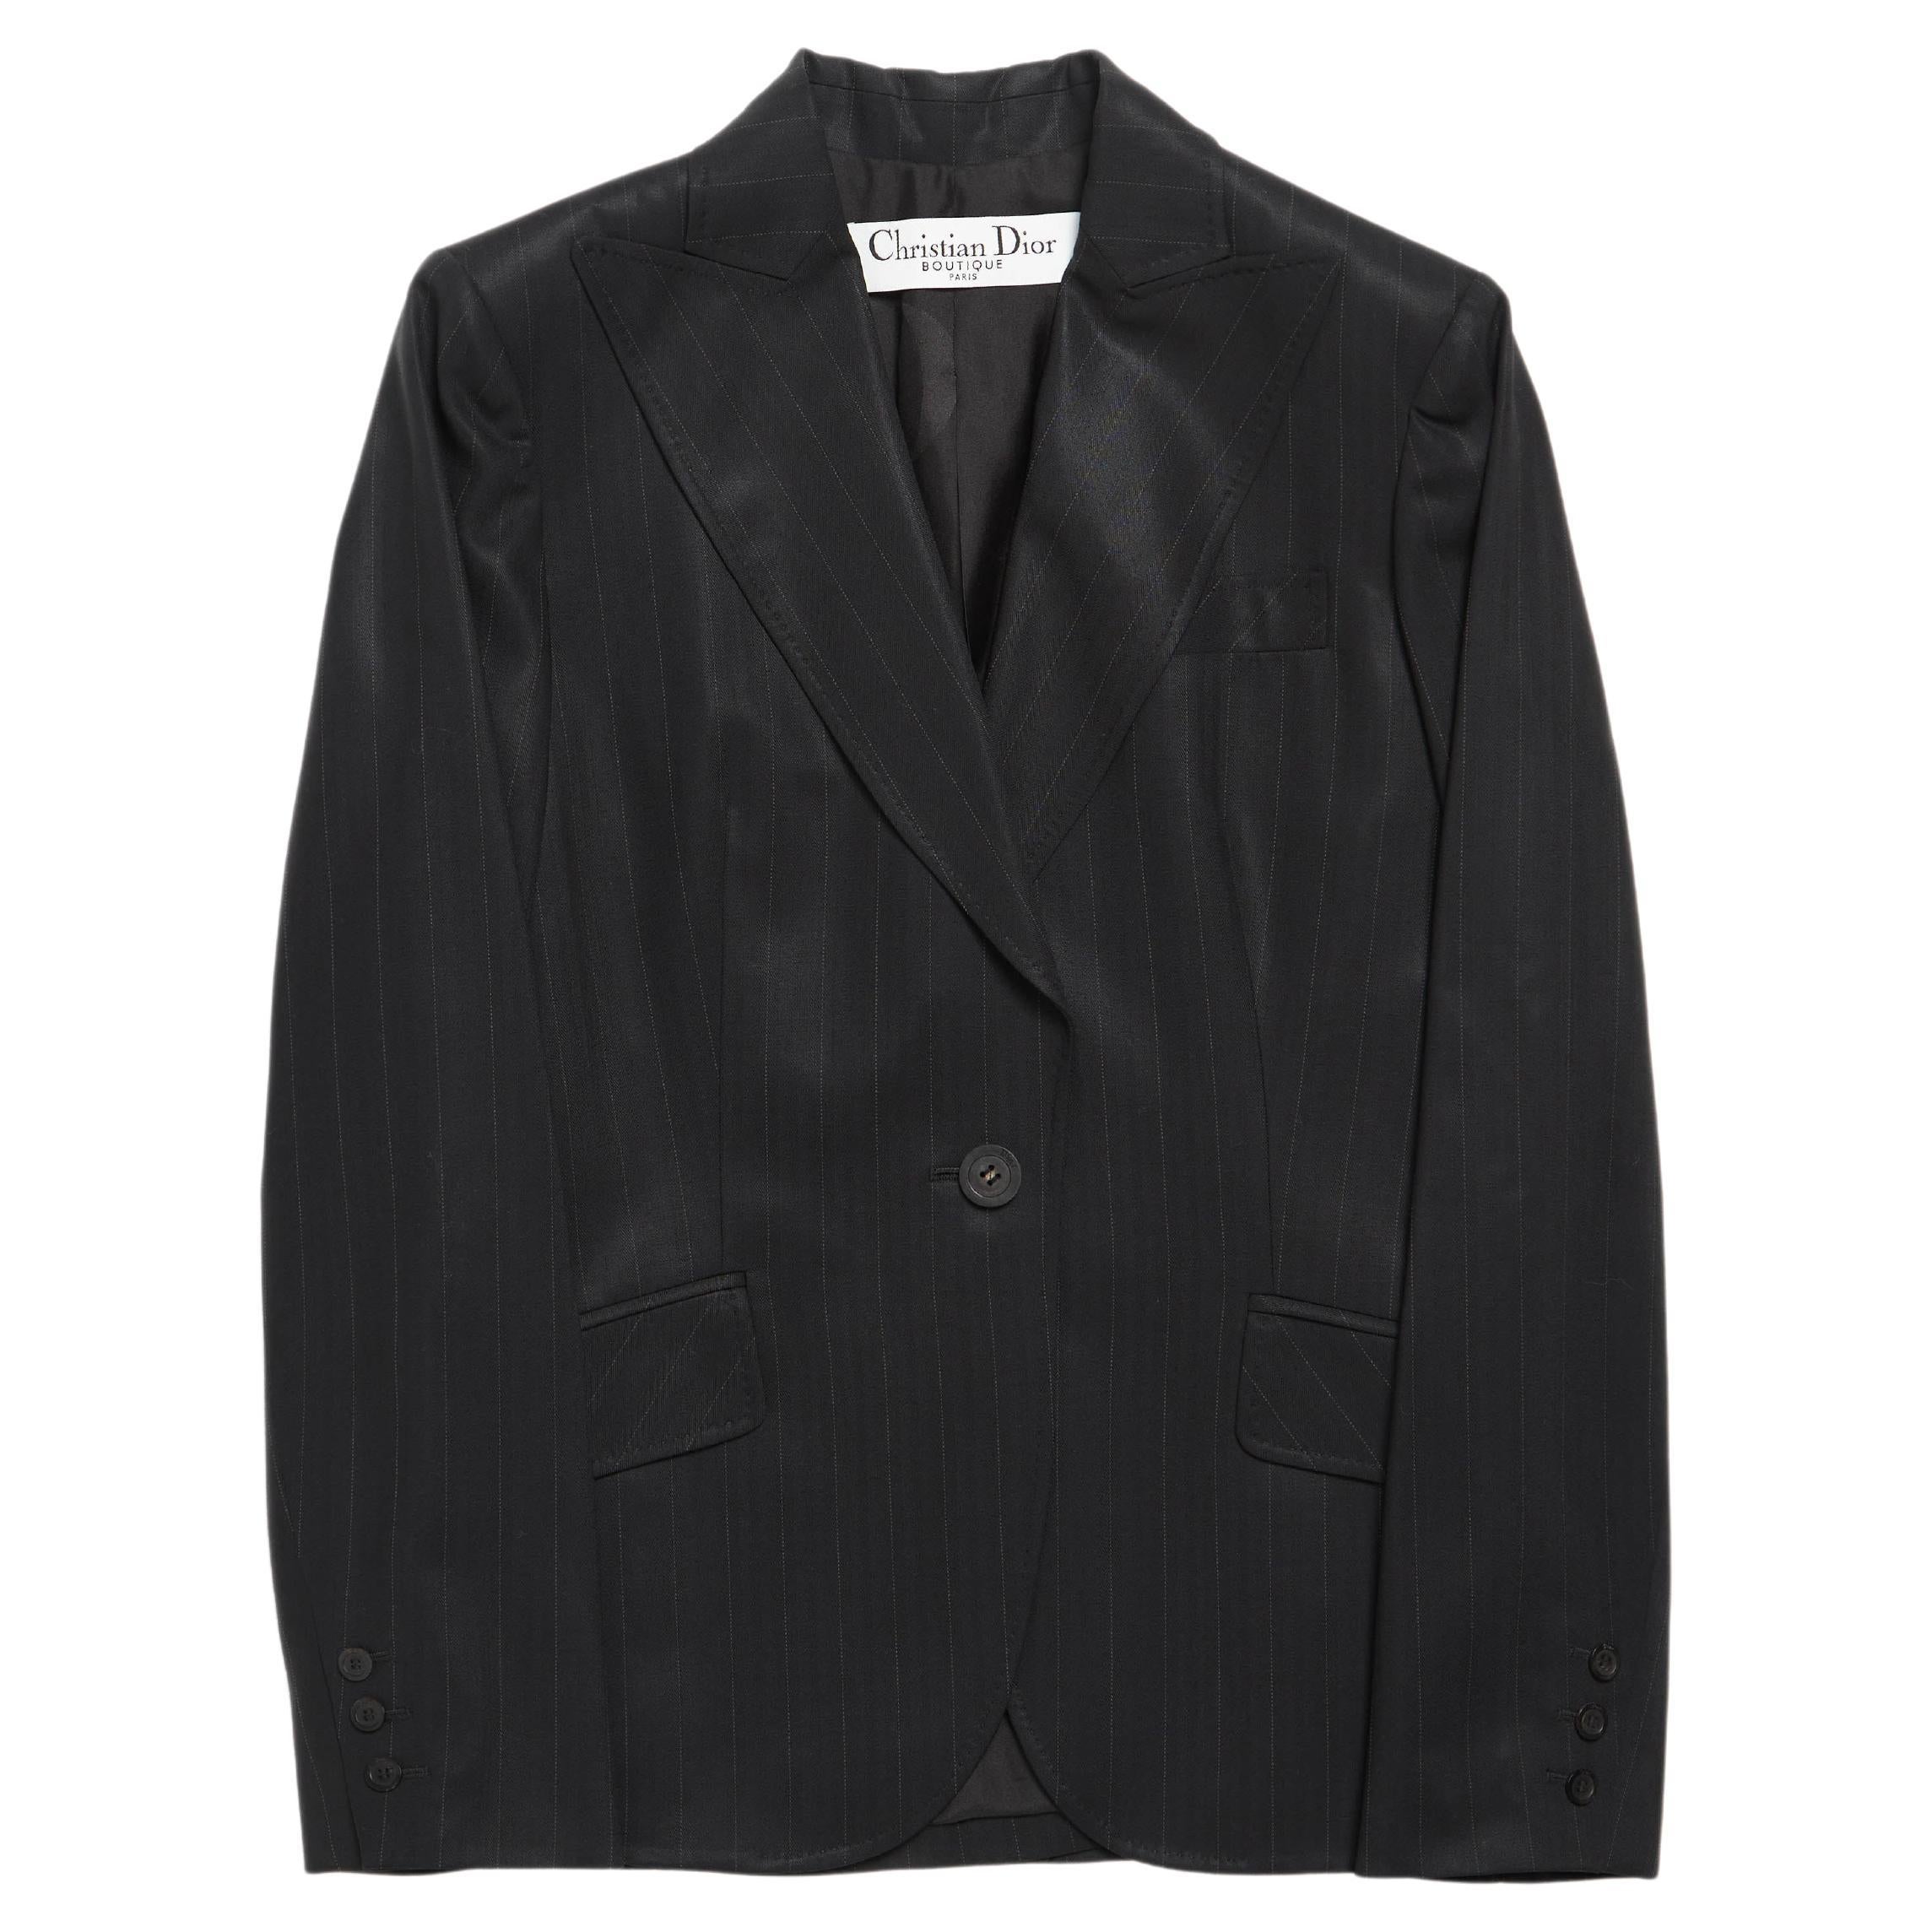 Dior Christian Dior Dark Gray Wool And Silk Blazer Jacket